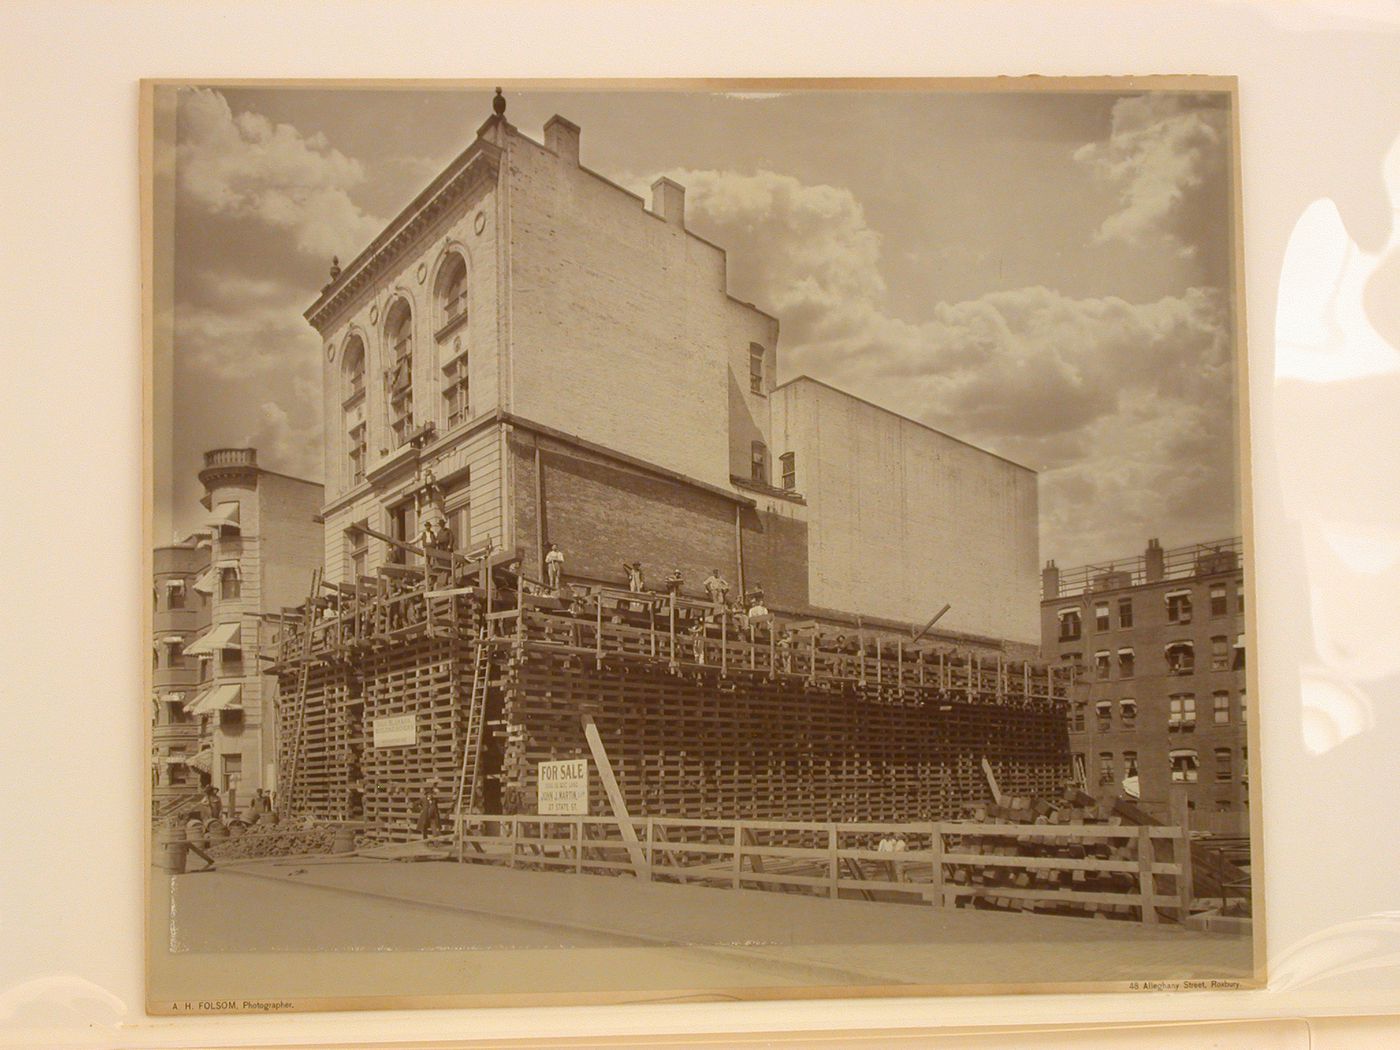 Construction and building movers [?], Roxbury, Alleghany Street, Boston [?], Massachusetts